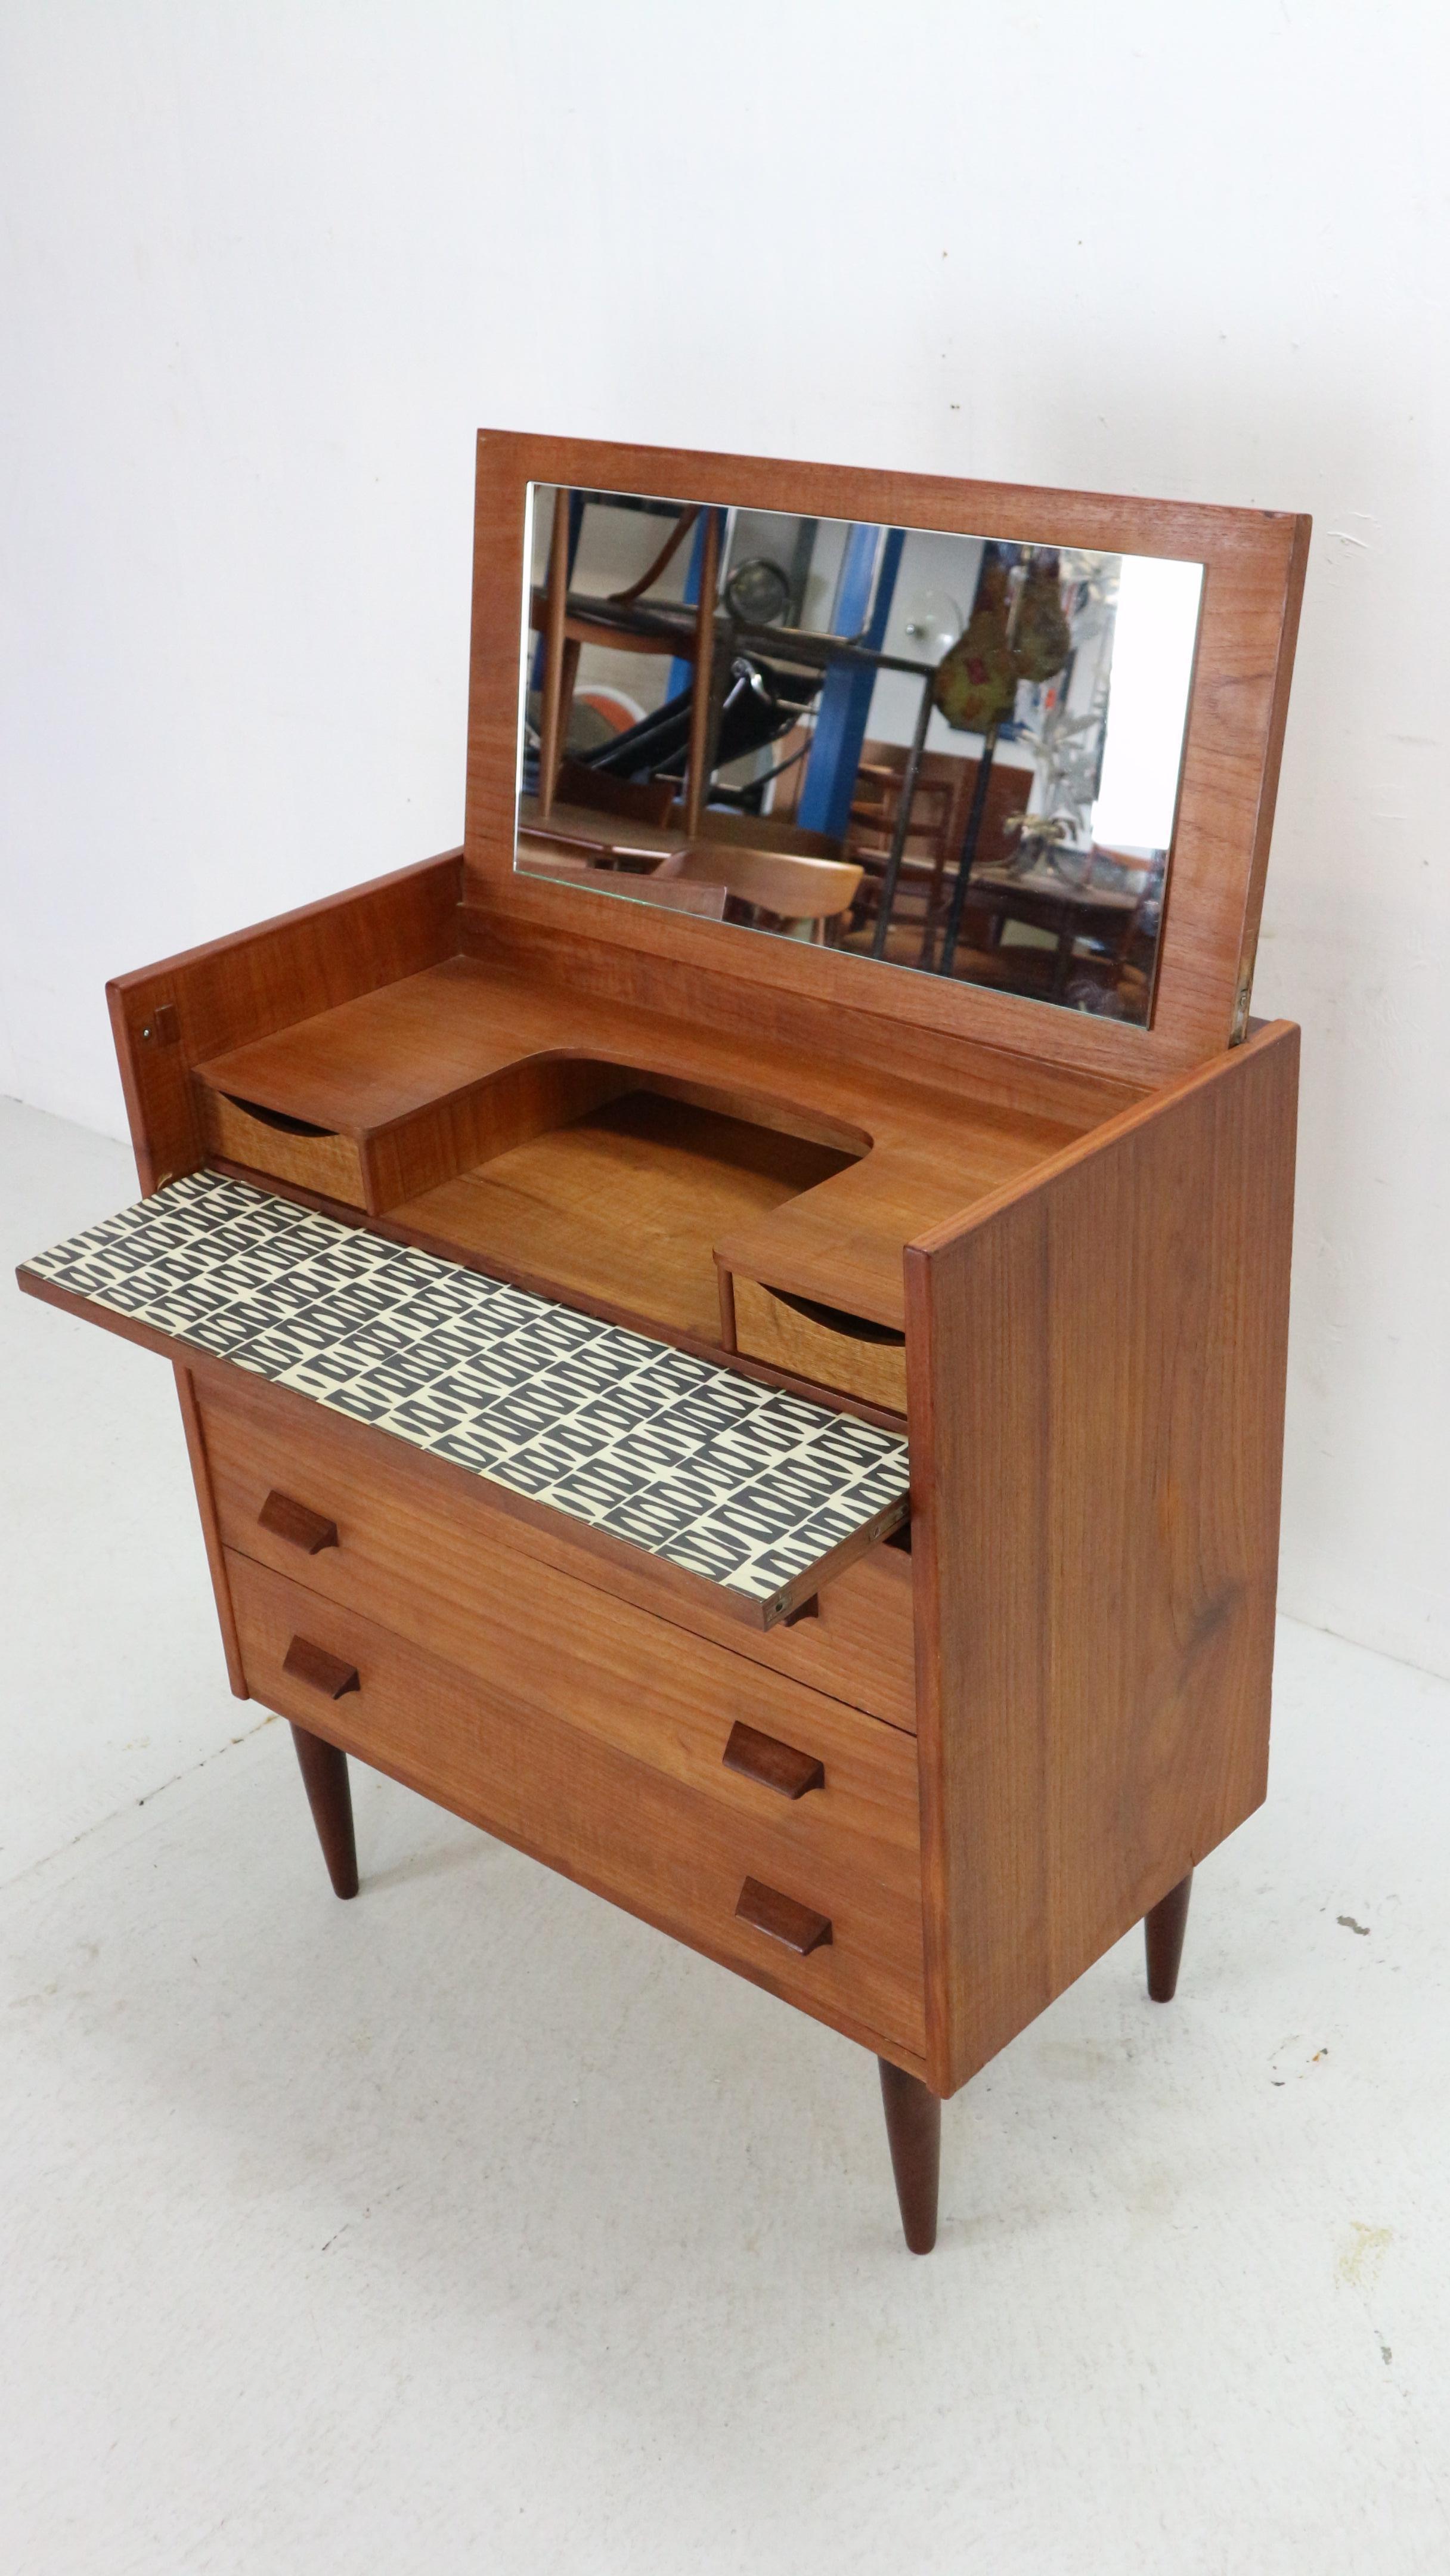 Mid-20th Century Scandinavian Modern Teak Flip-Top Make Up Table- Dresser, 1960's Denmark